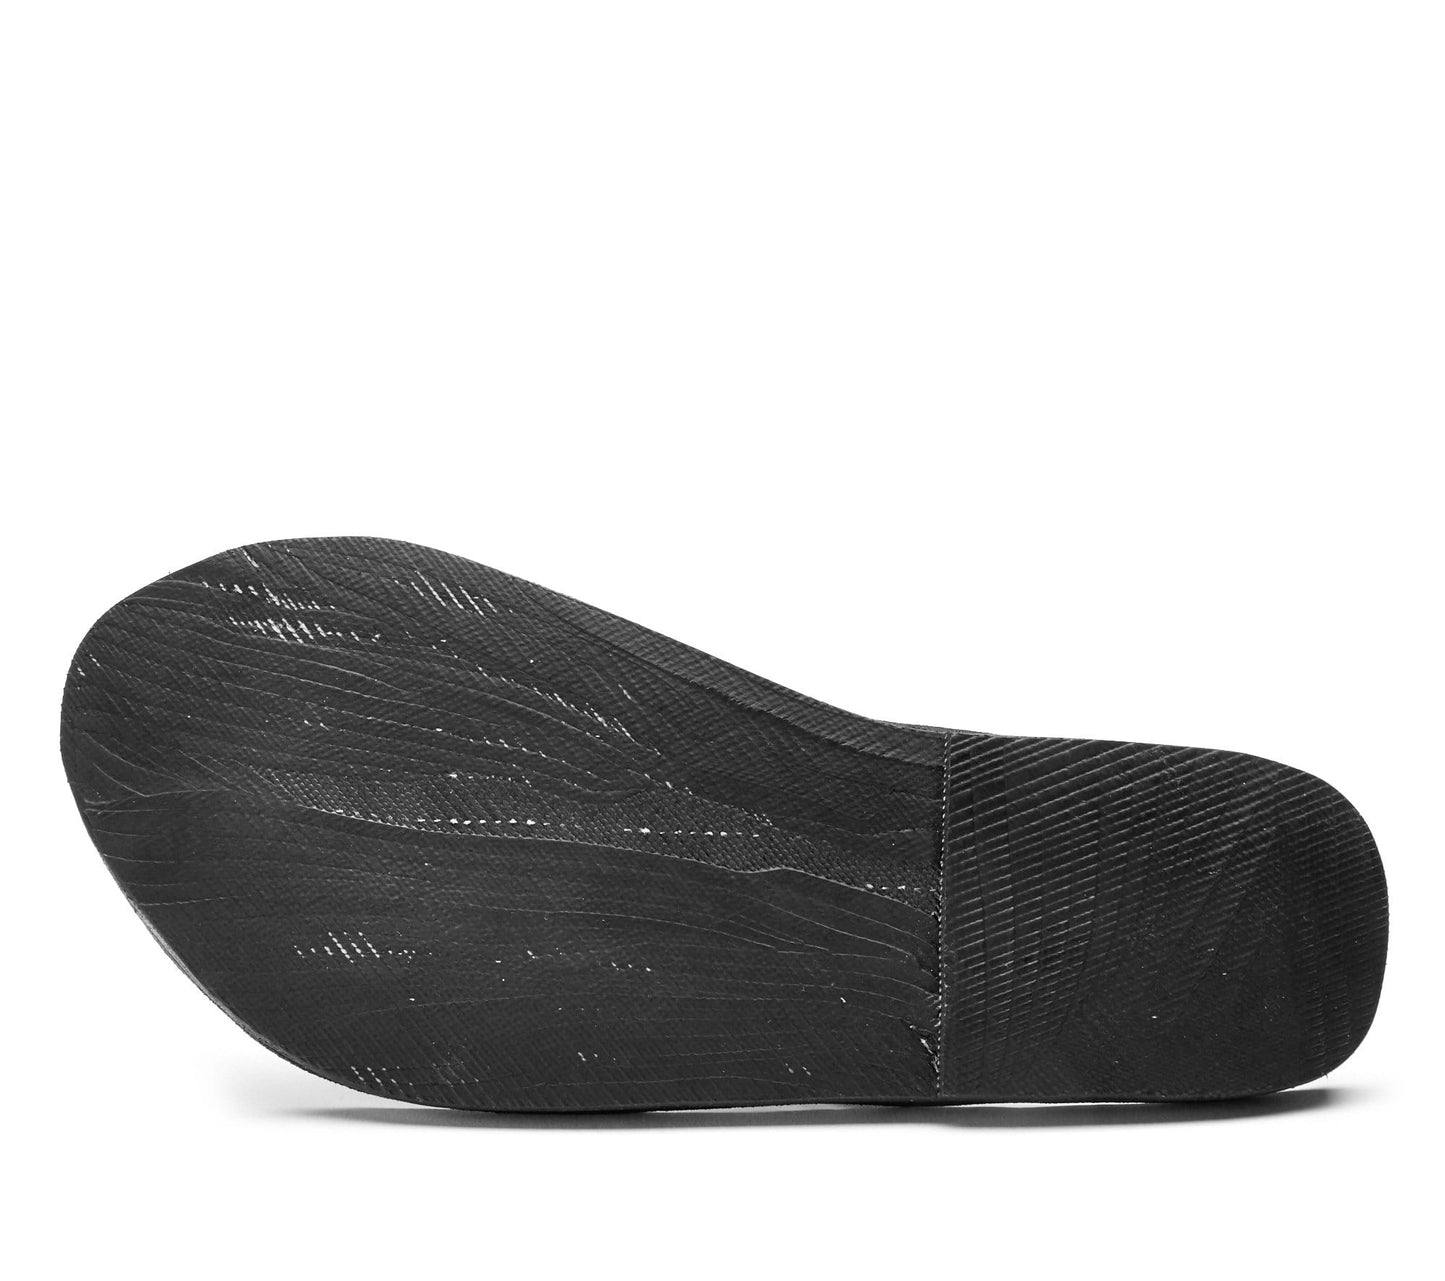 The Ophelia Leather Slide Sandal